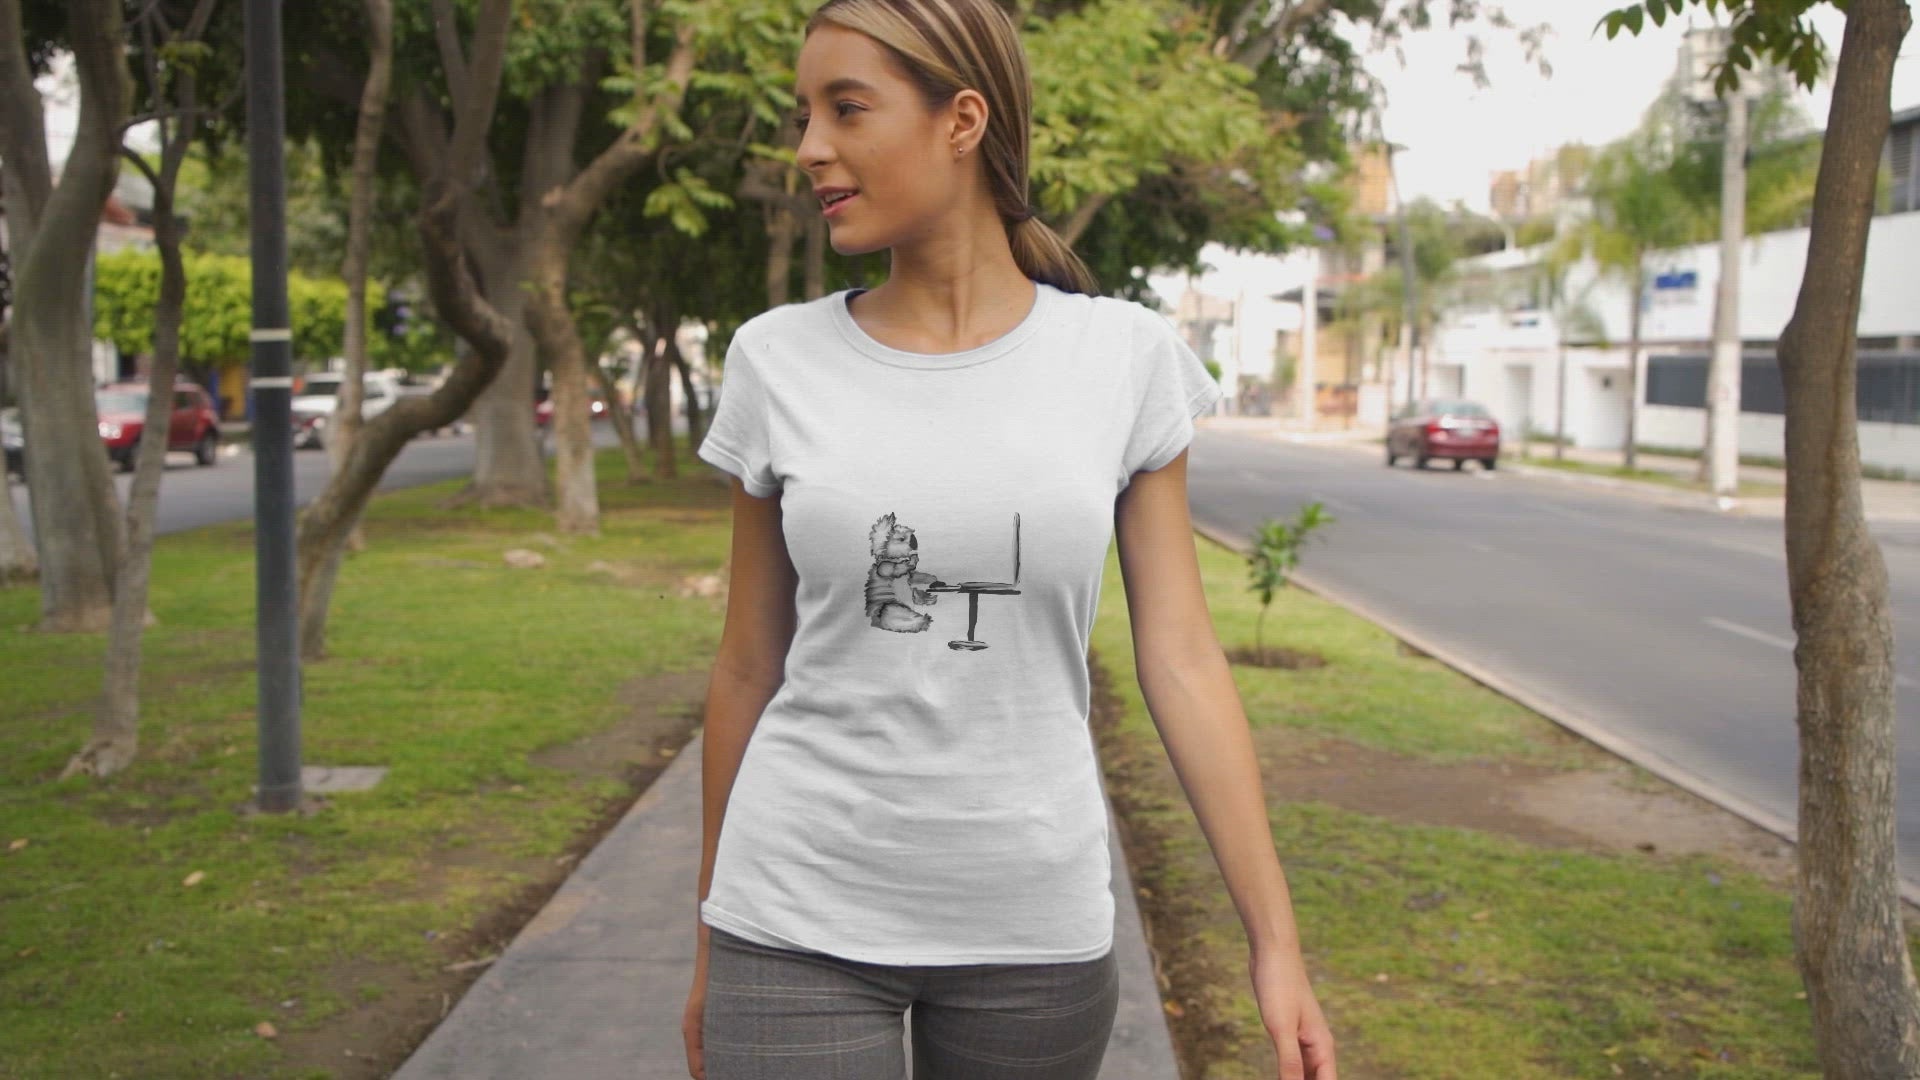 Koala on Computer | Women's 100% Organic Cotton T Shirt worn by a woman walking